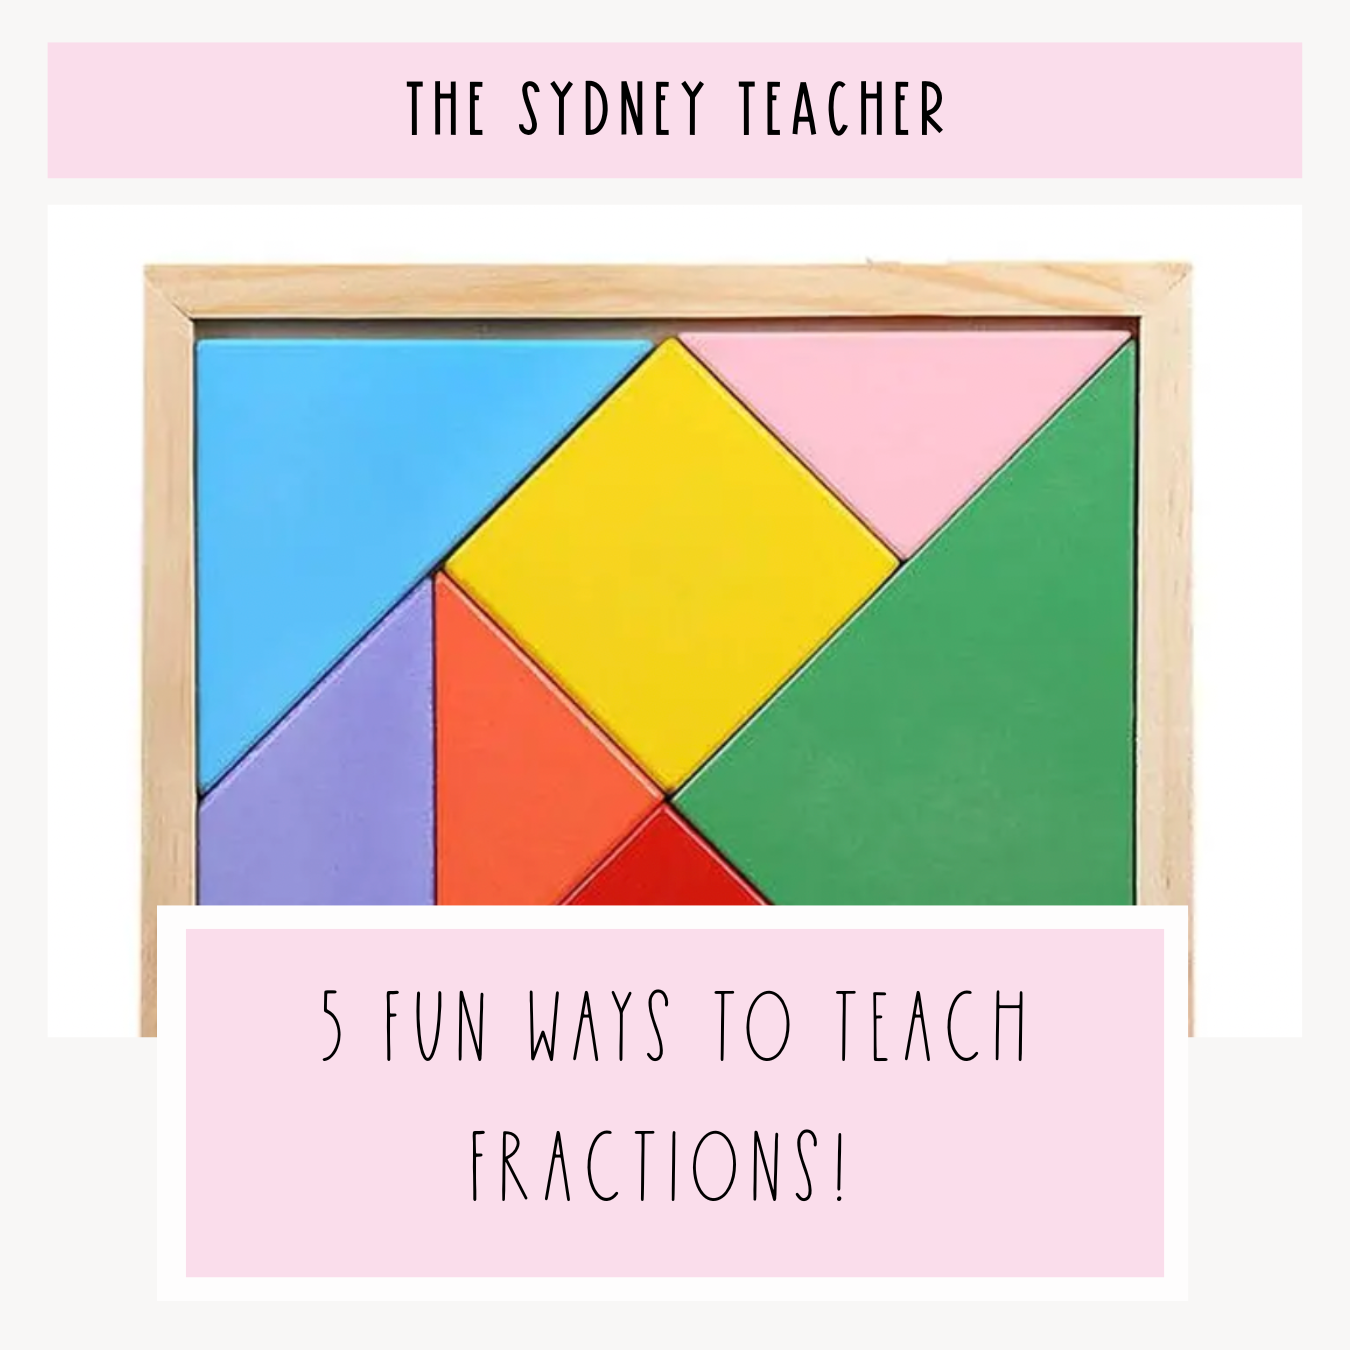 Five Fun Ways to Teach Fractions!